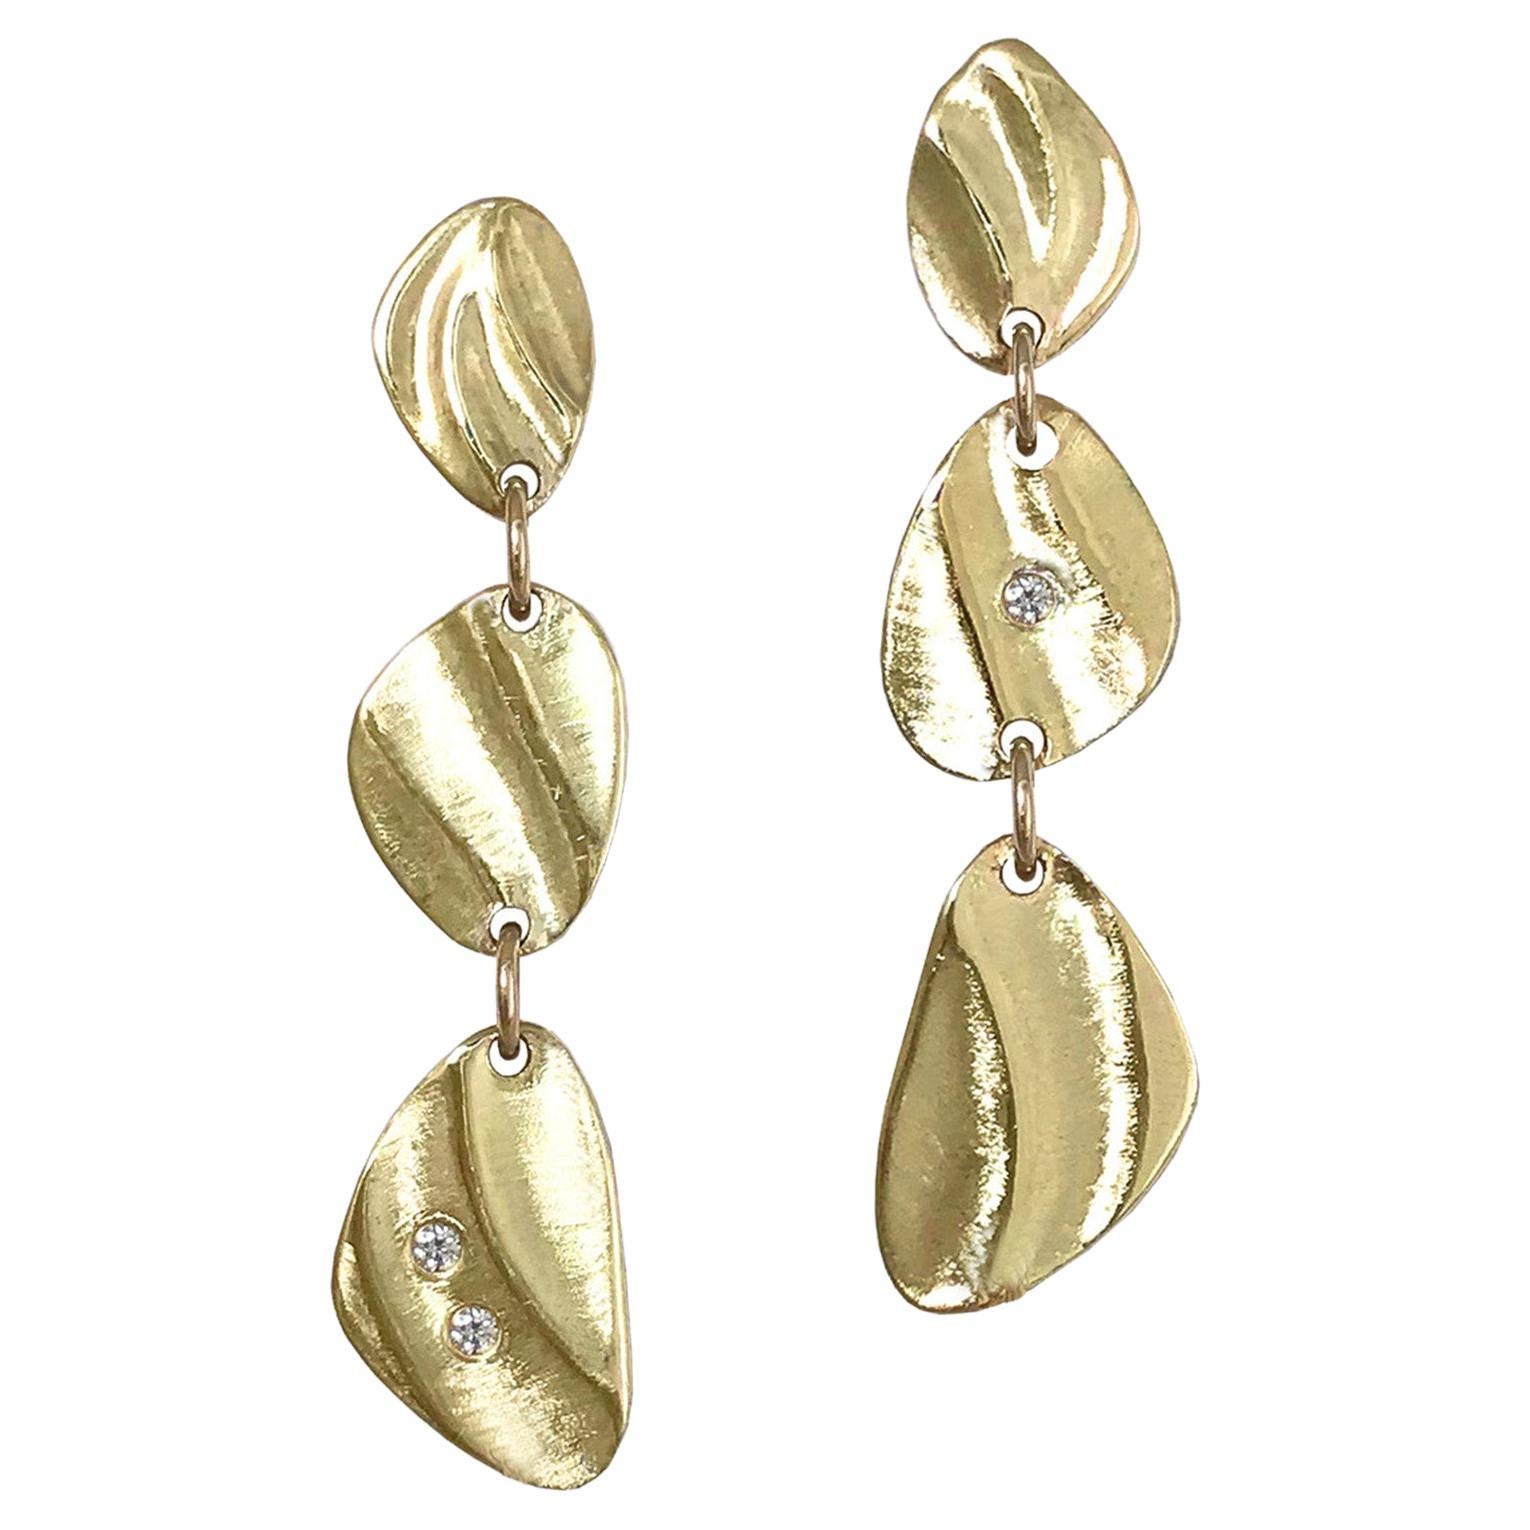 14 Karat Gold Mini Pebble Dangle Earrings with Diamond Accents from K.Mita